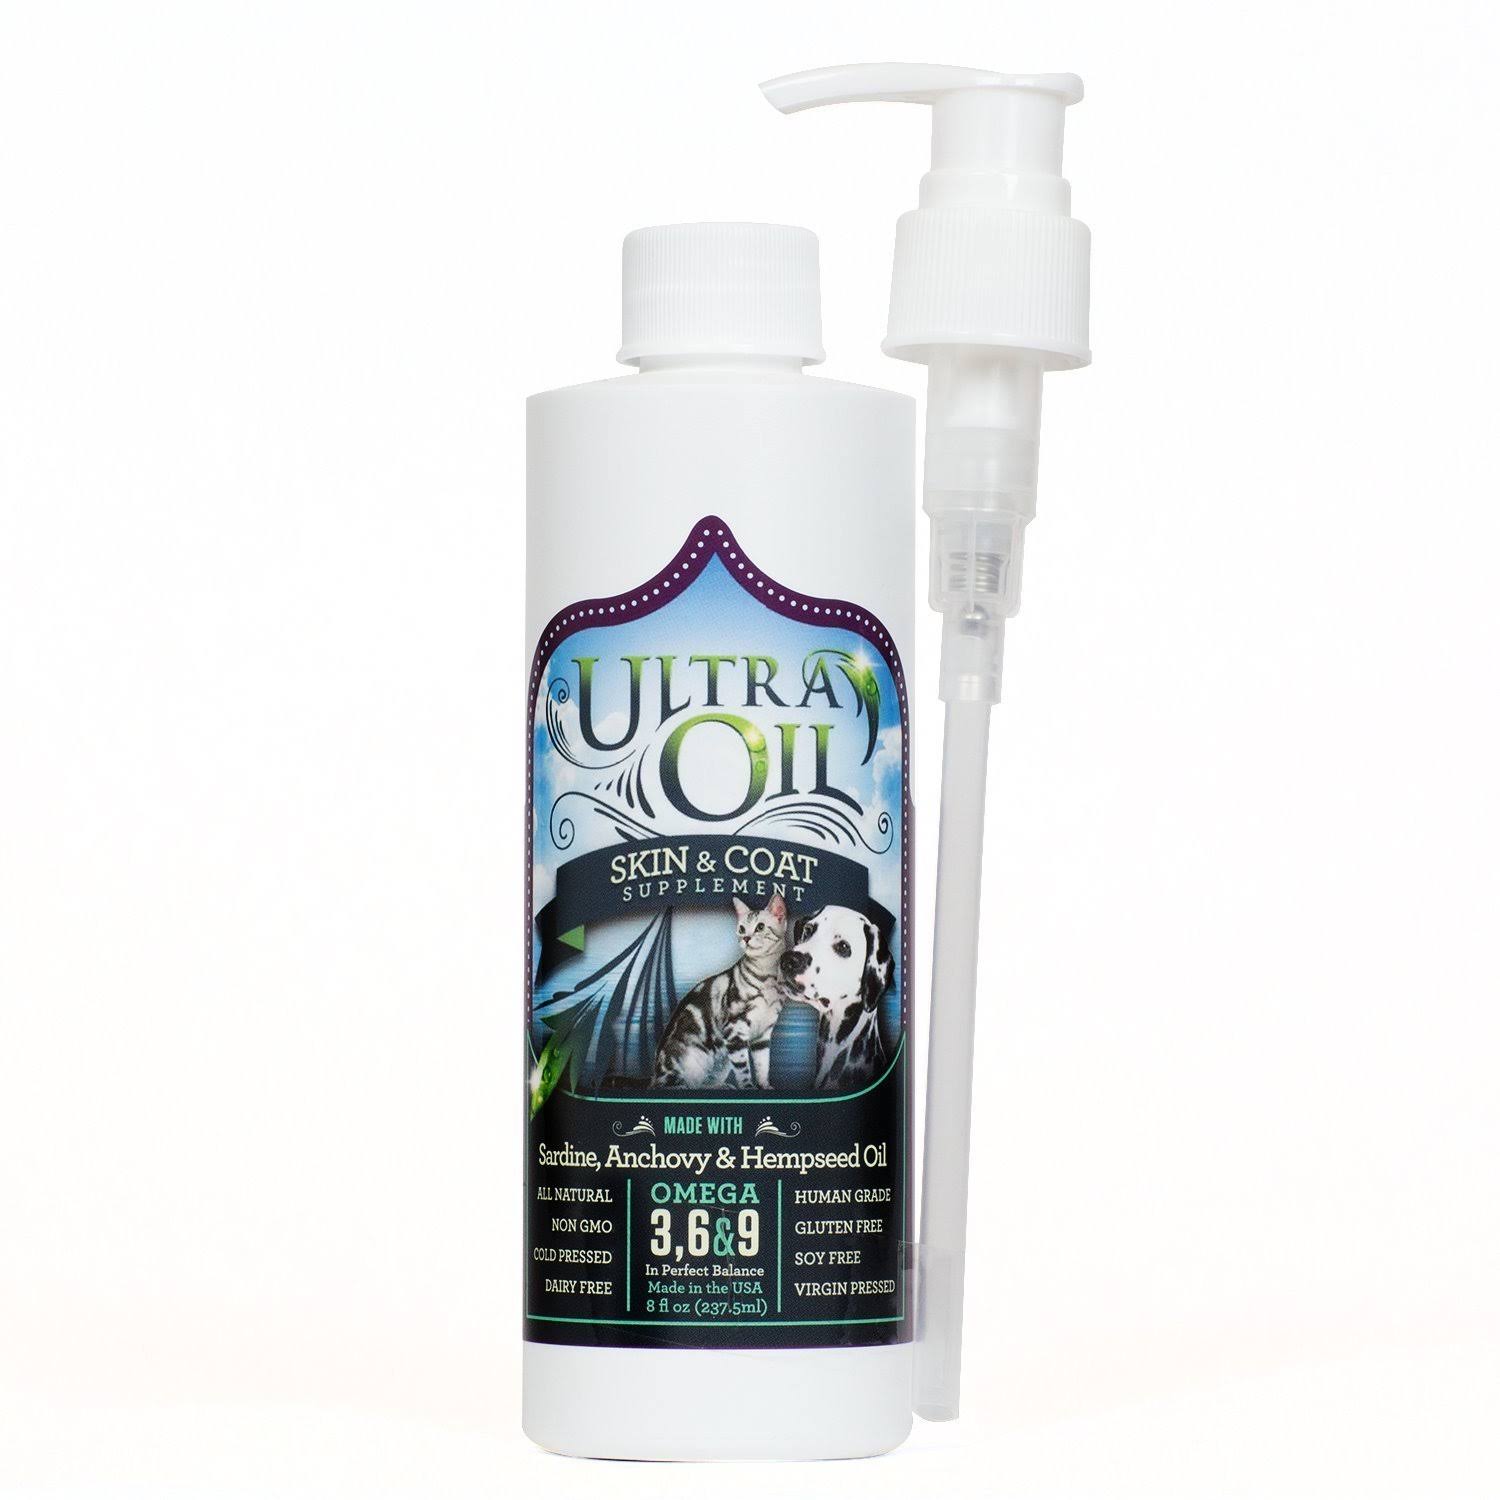 Ultra Oil Skin & Coat Supplement 8 oz.